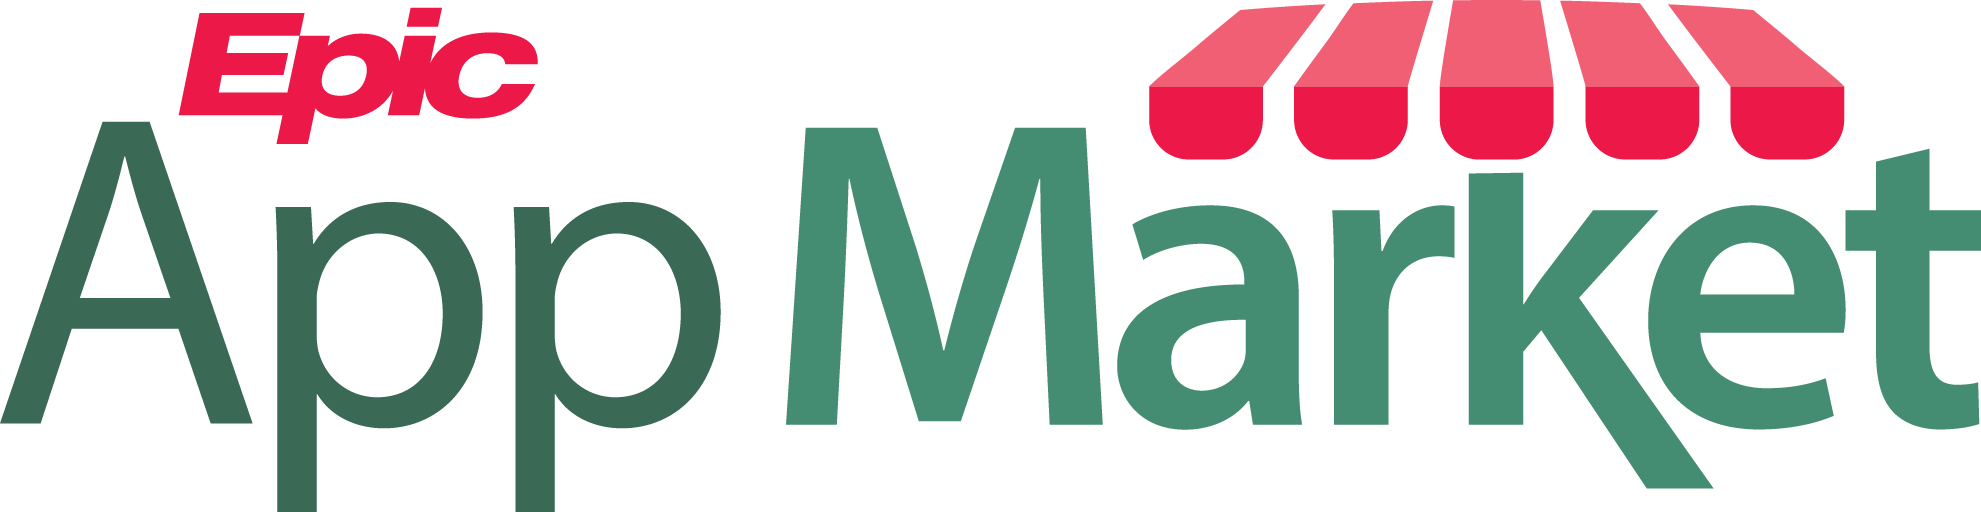 Vendor Services logo